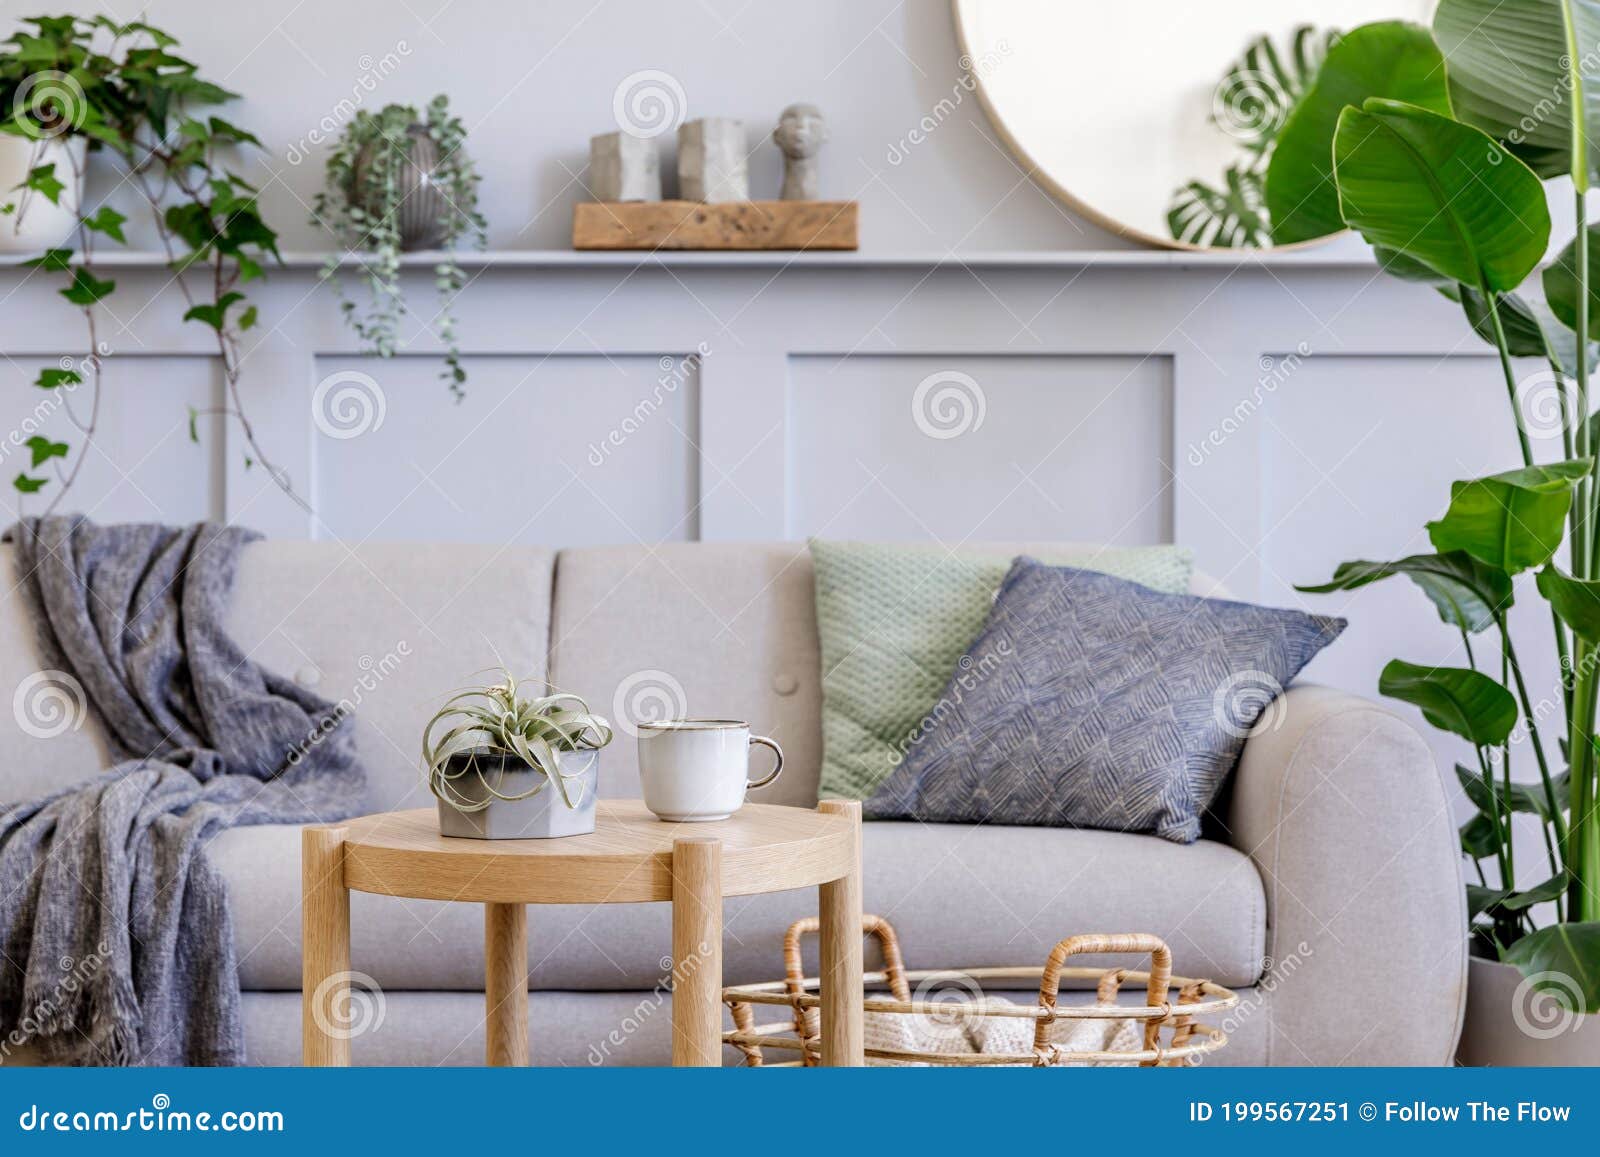 Interior Design Of Scandinavian Living Room With Stylish Grey Sofa